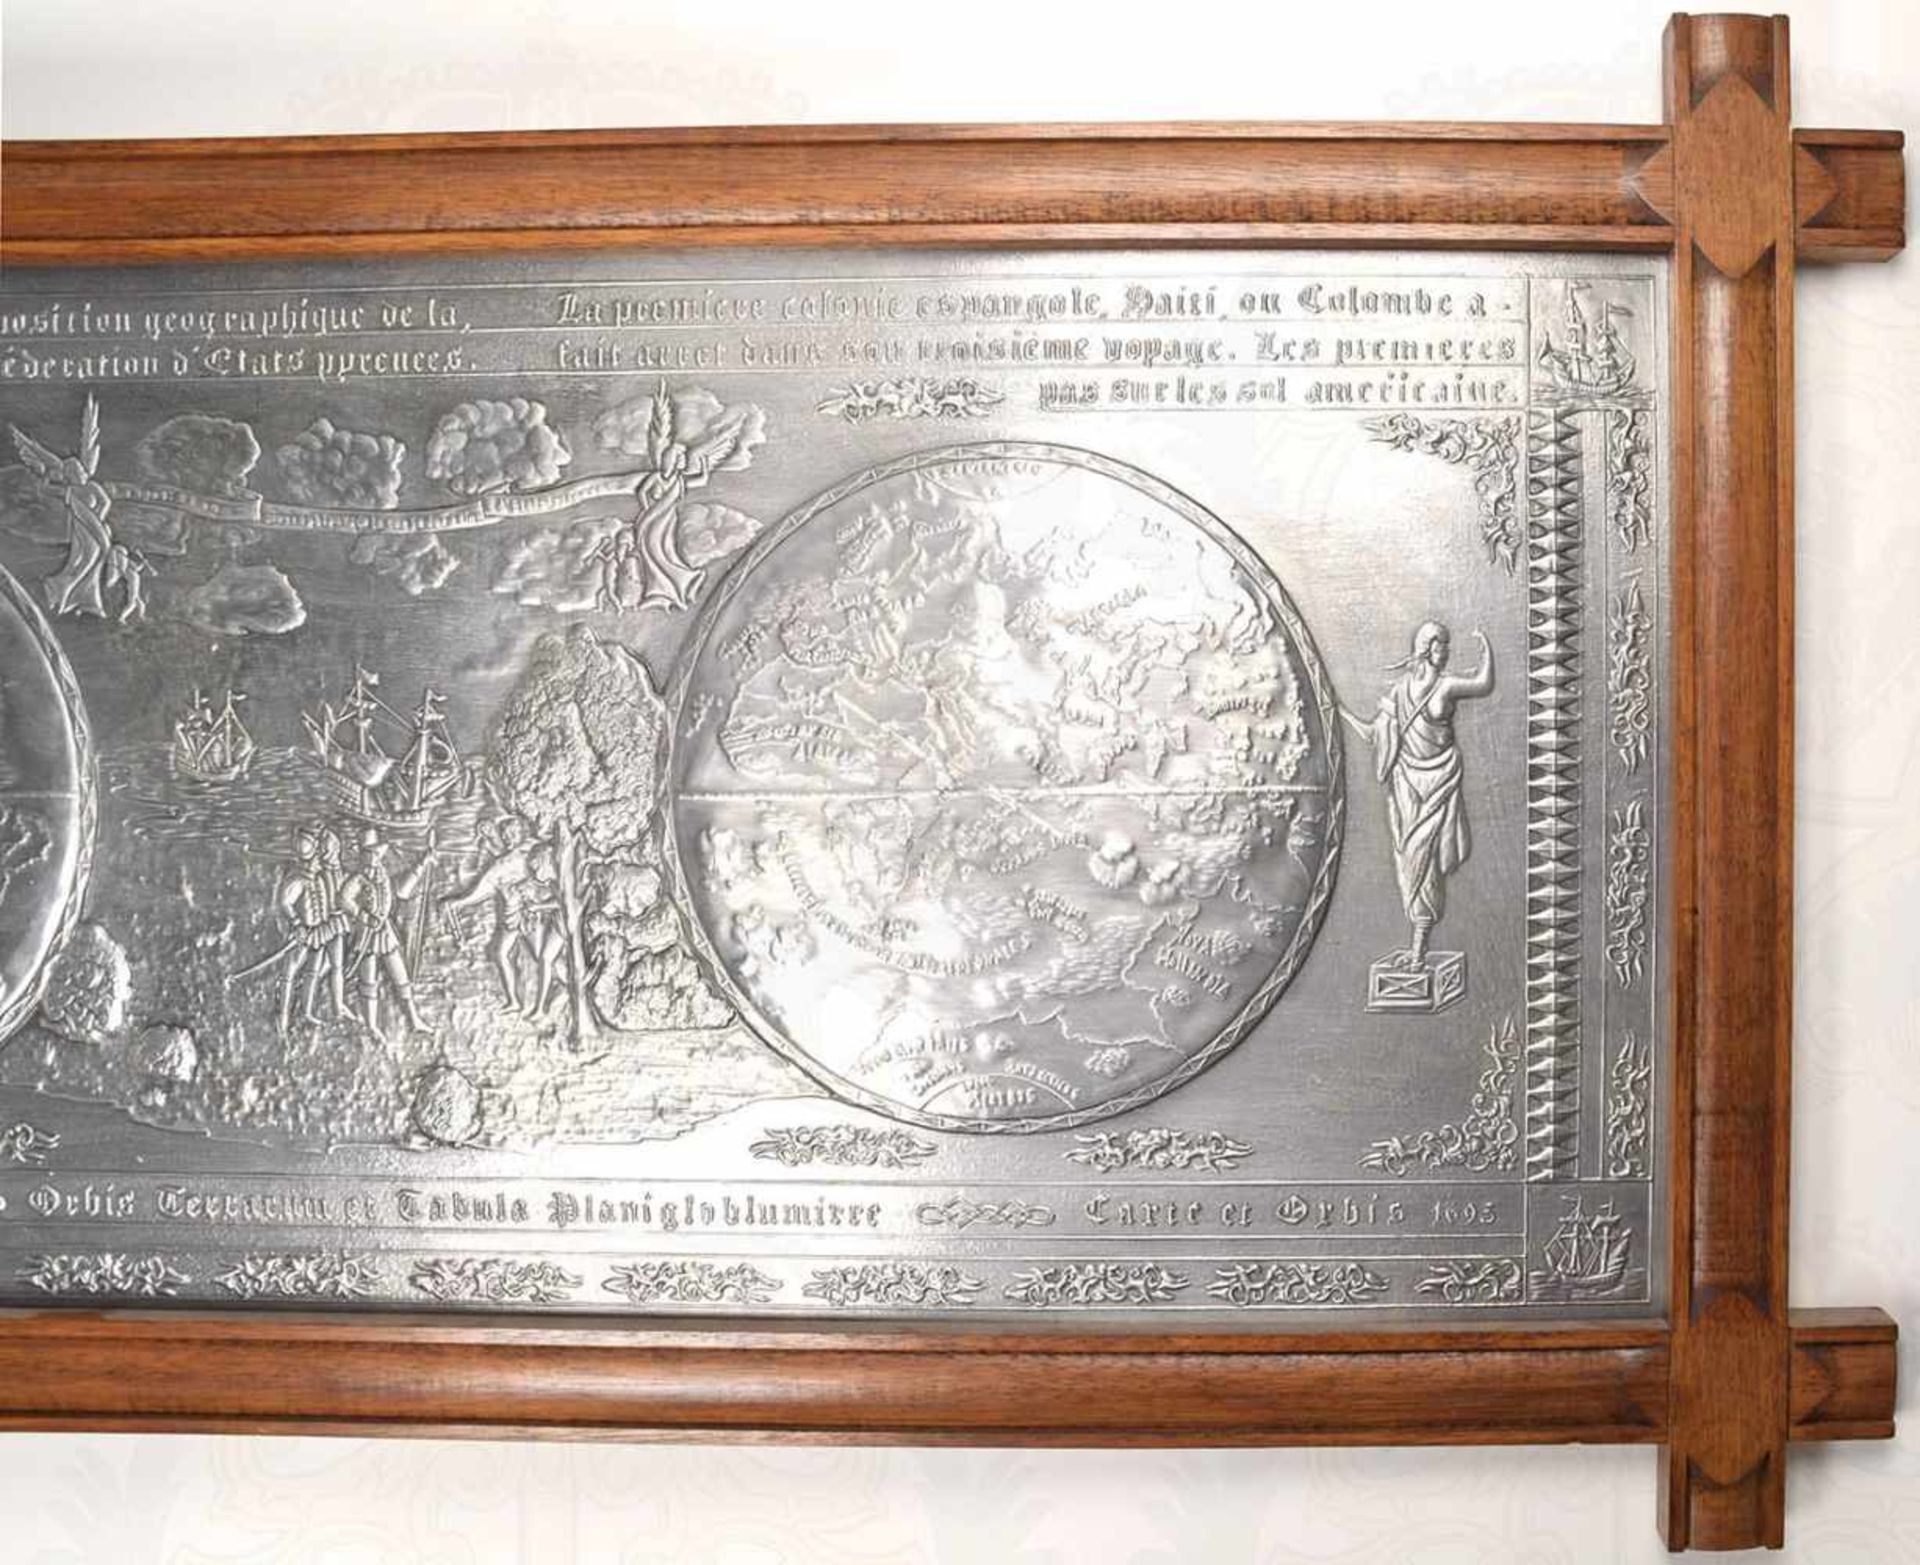 WANDRELIEF „OCUPANTIS TERRA NOVA“, erhabene Darstellung der Landung von Christoph Kolumbus in - Image 2 of 4